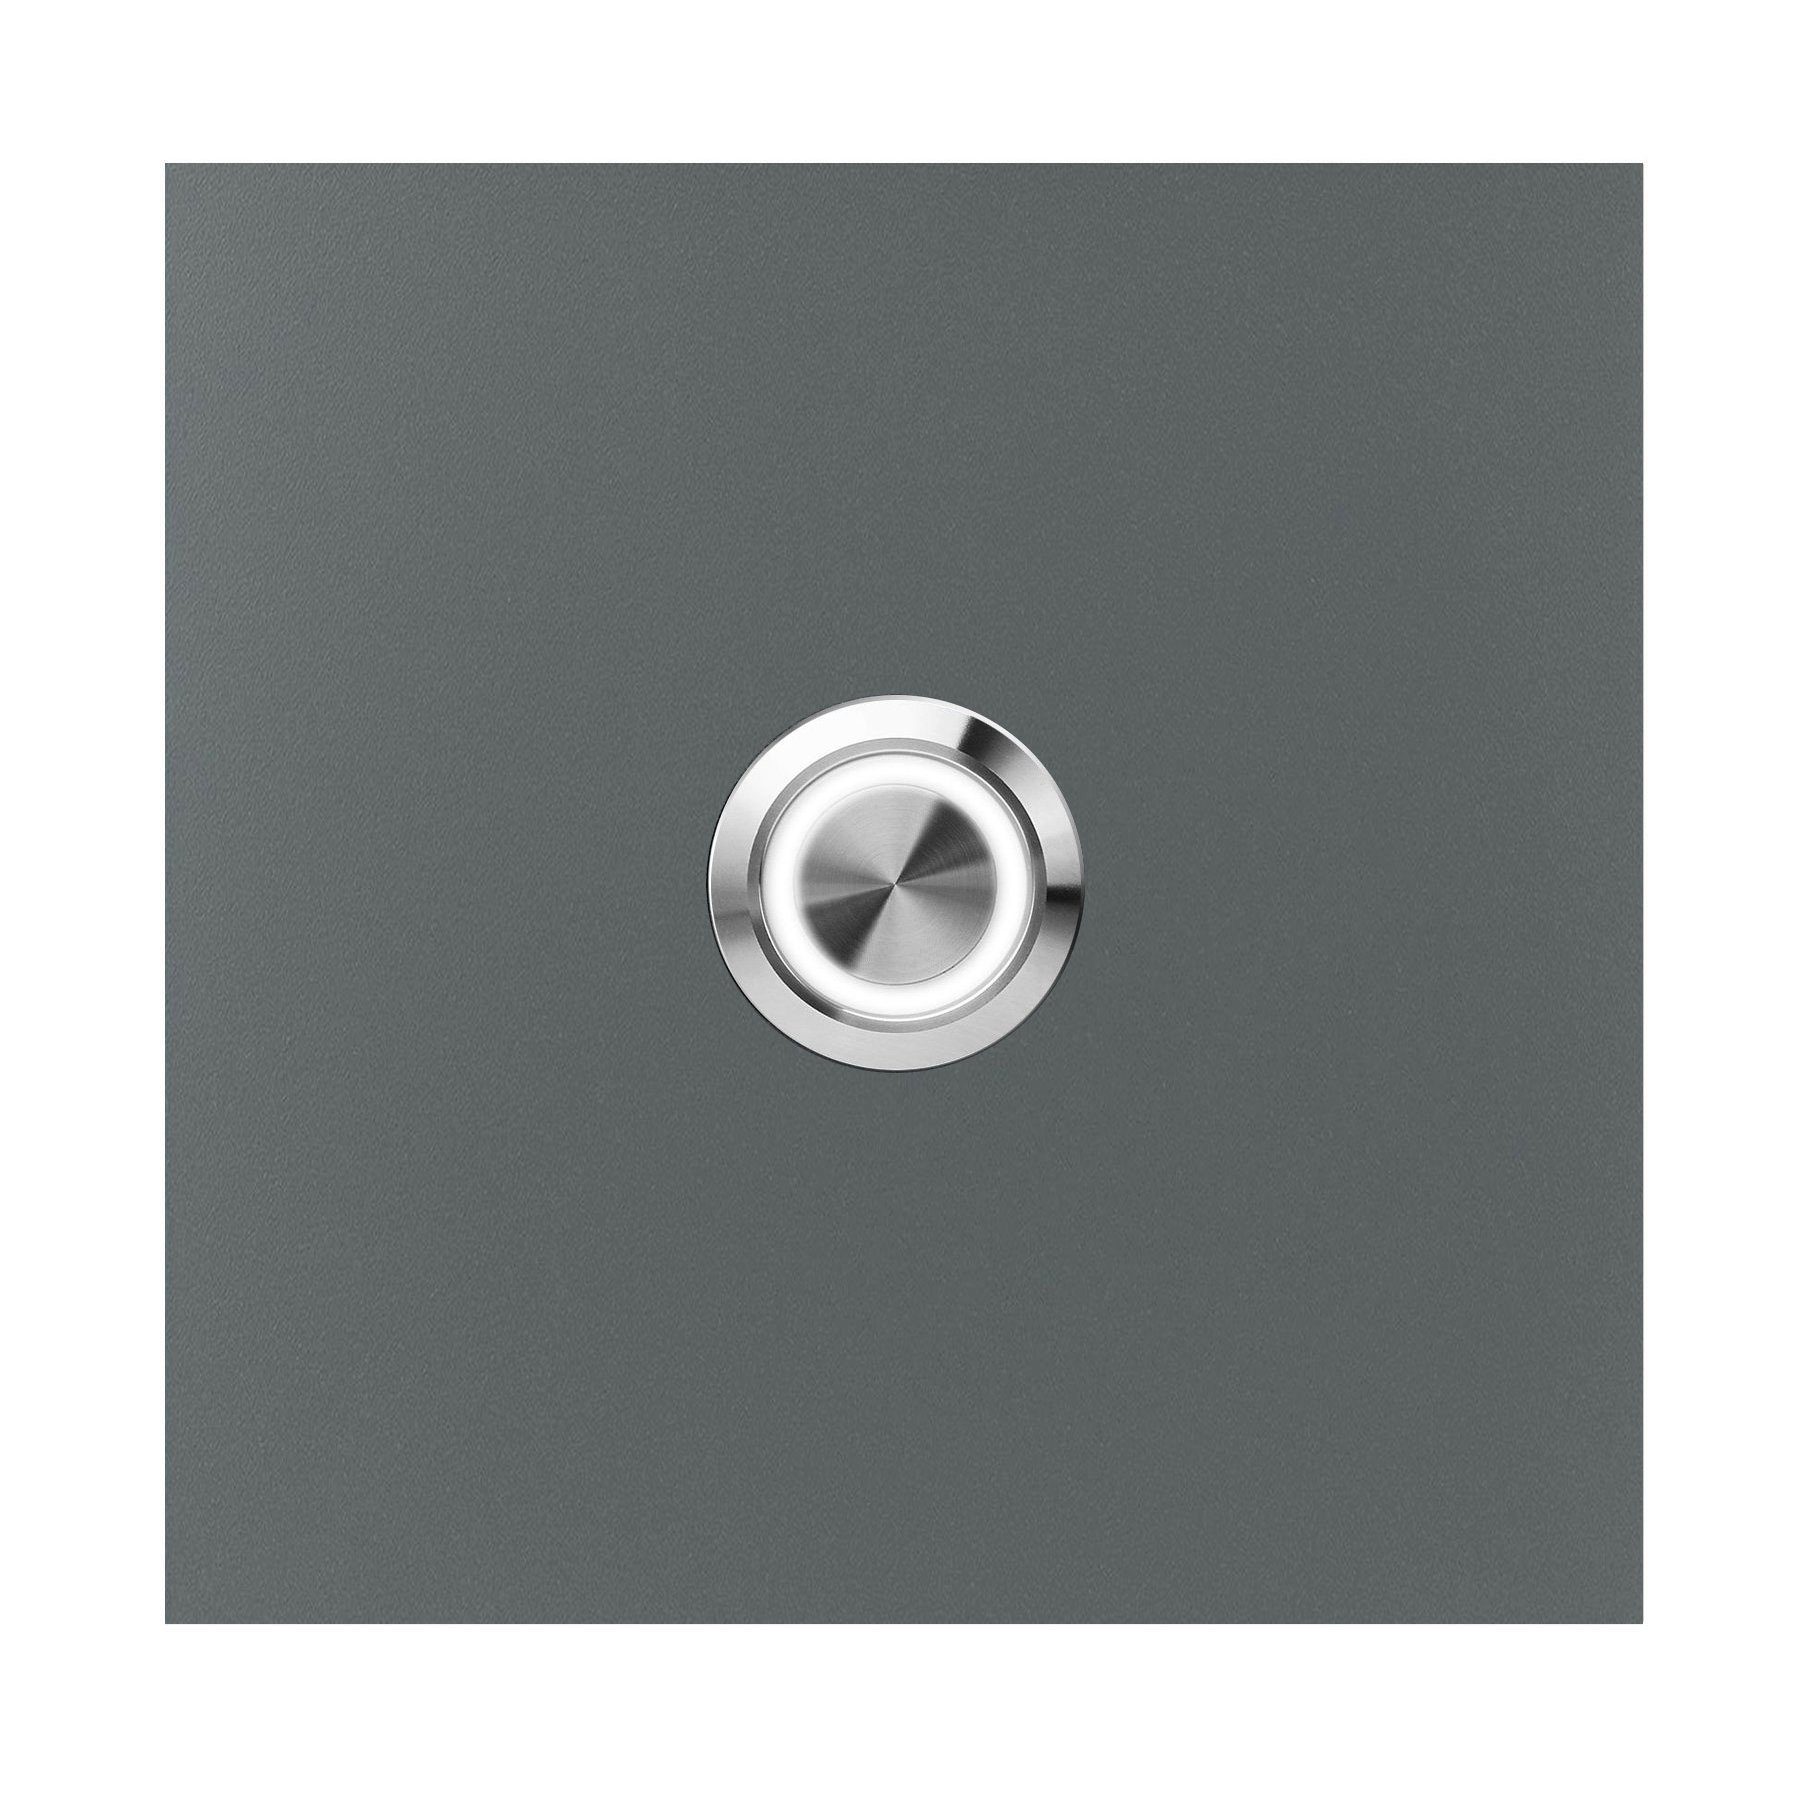 MOCAVI Türklingel MOCAVI RING 505 LED-Klingel basalt-grau (RAL 7012) aus V4A-Edelstahl, quadratisch (8,5 cm)